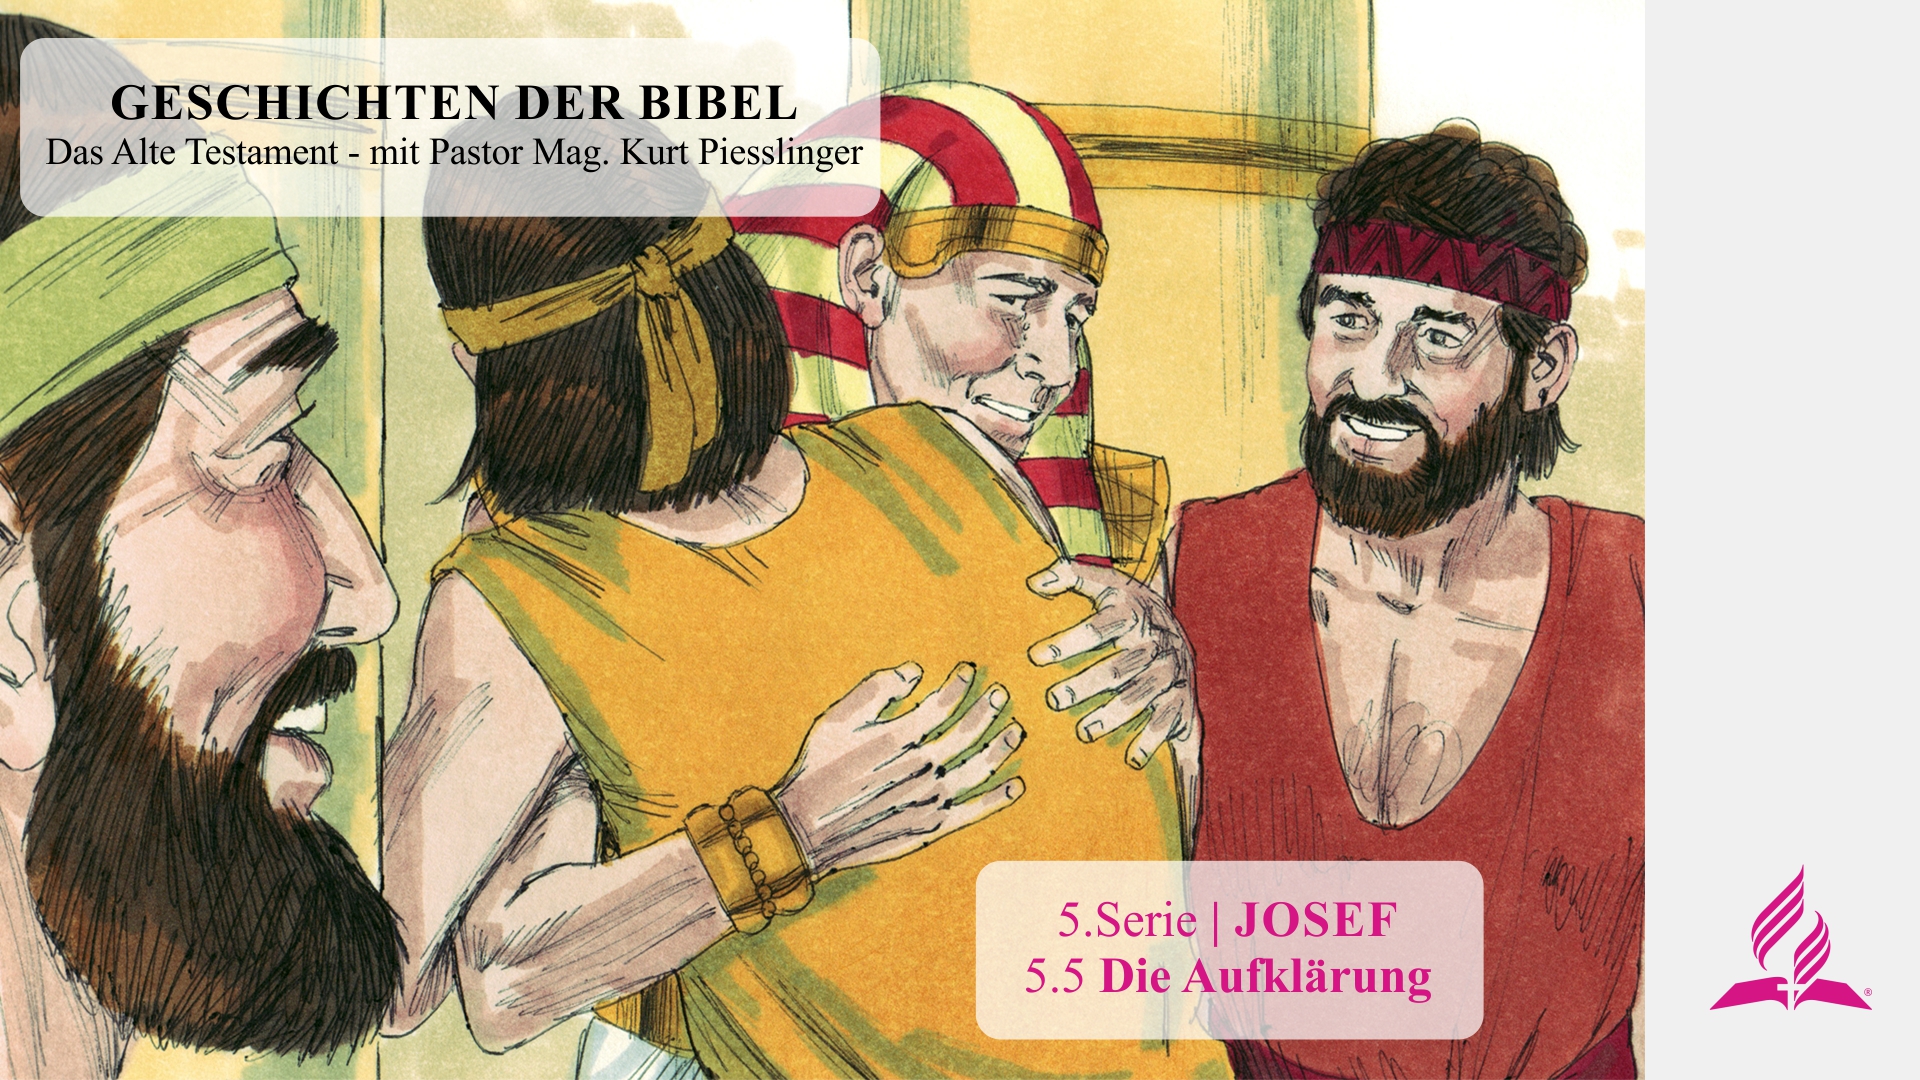 GESCHICHTEN DER BIBEL: 5.5 Die Aufklärung – 5.JOSEF | Pastor Mag. Kurt Piesslinger